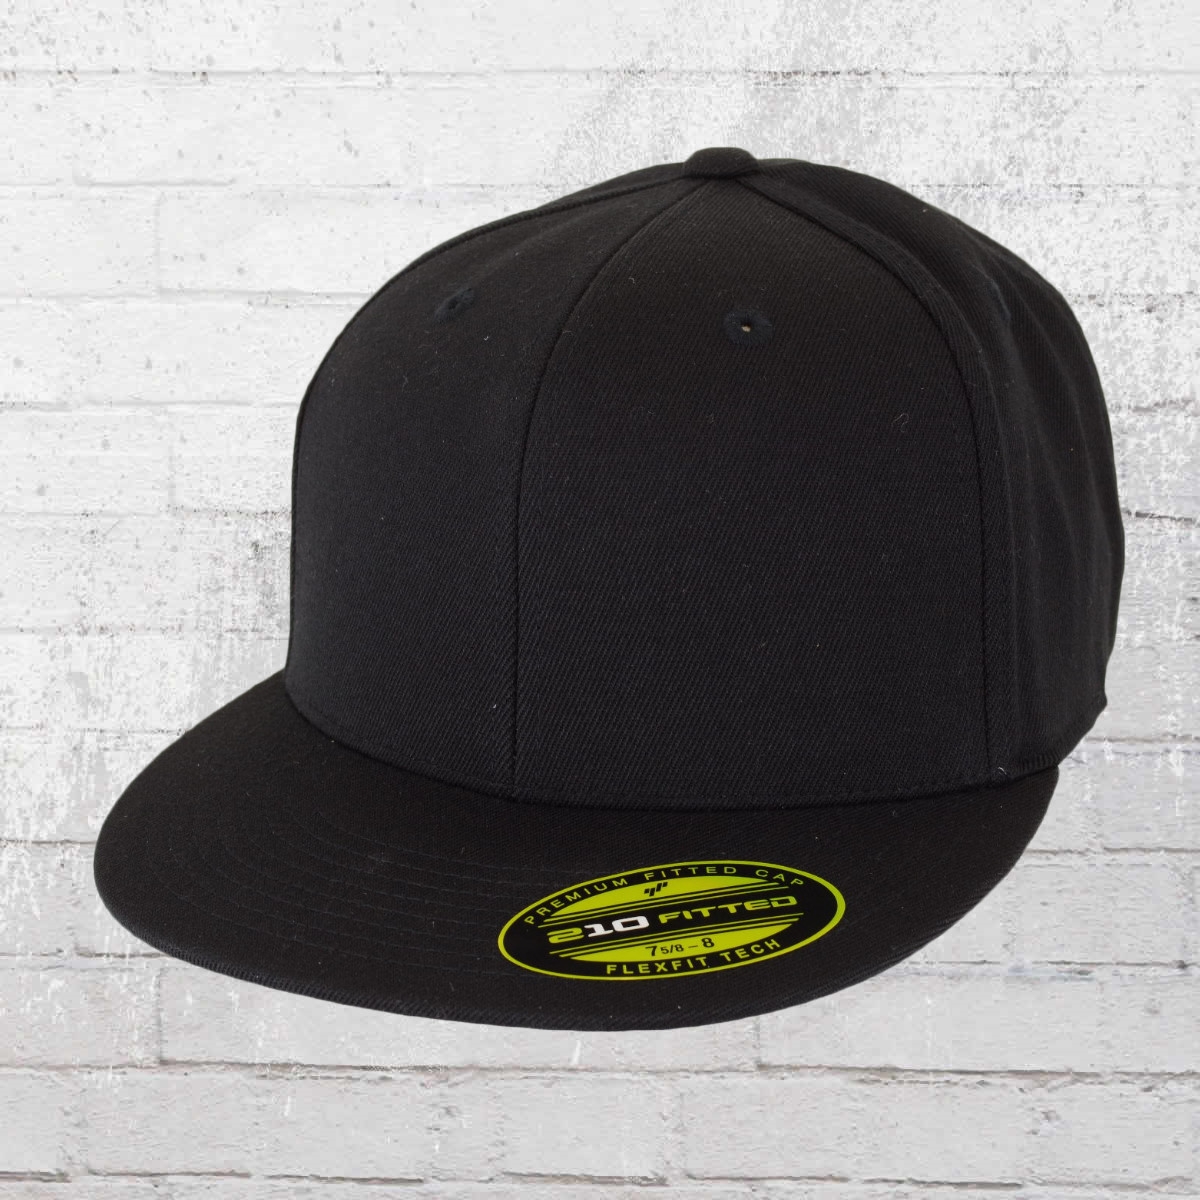 Original FLEXFIT® 210 Premium Fitted Basecap Baseball Cap Kappe black black 